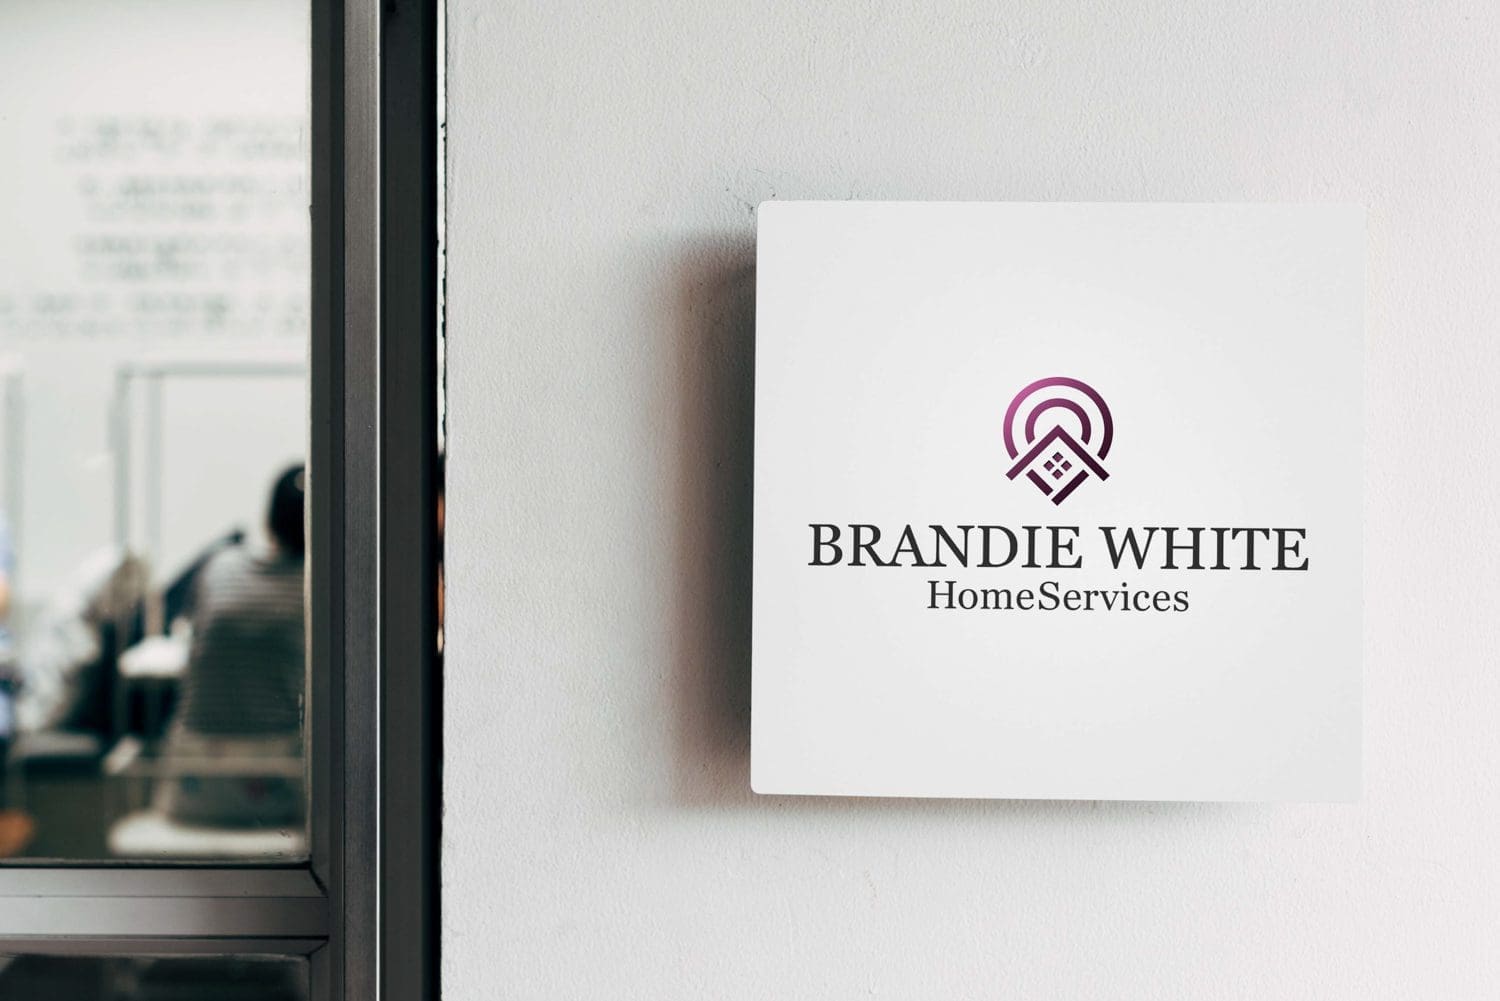 Brandie White Home Services sign